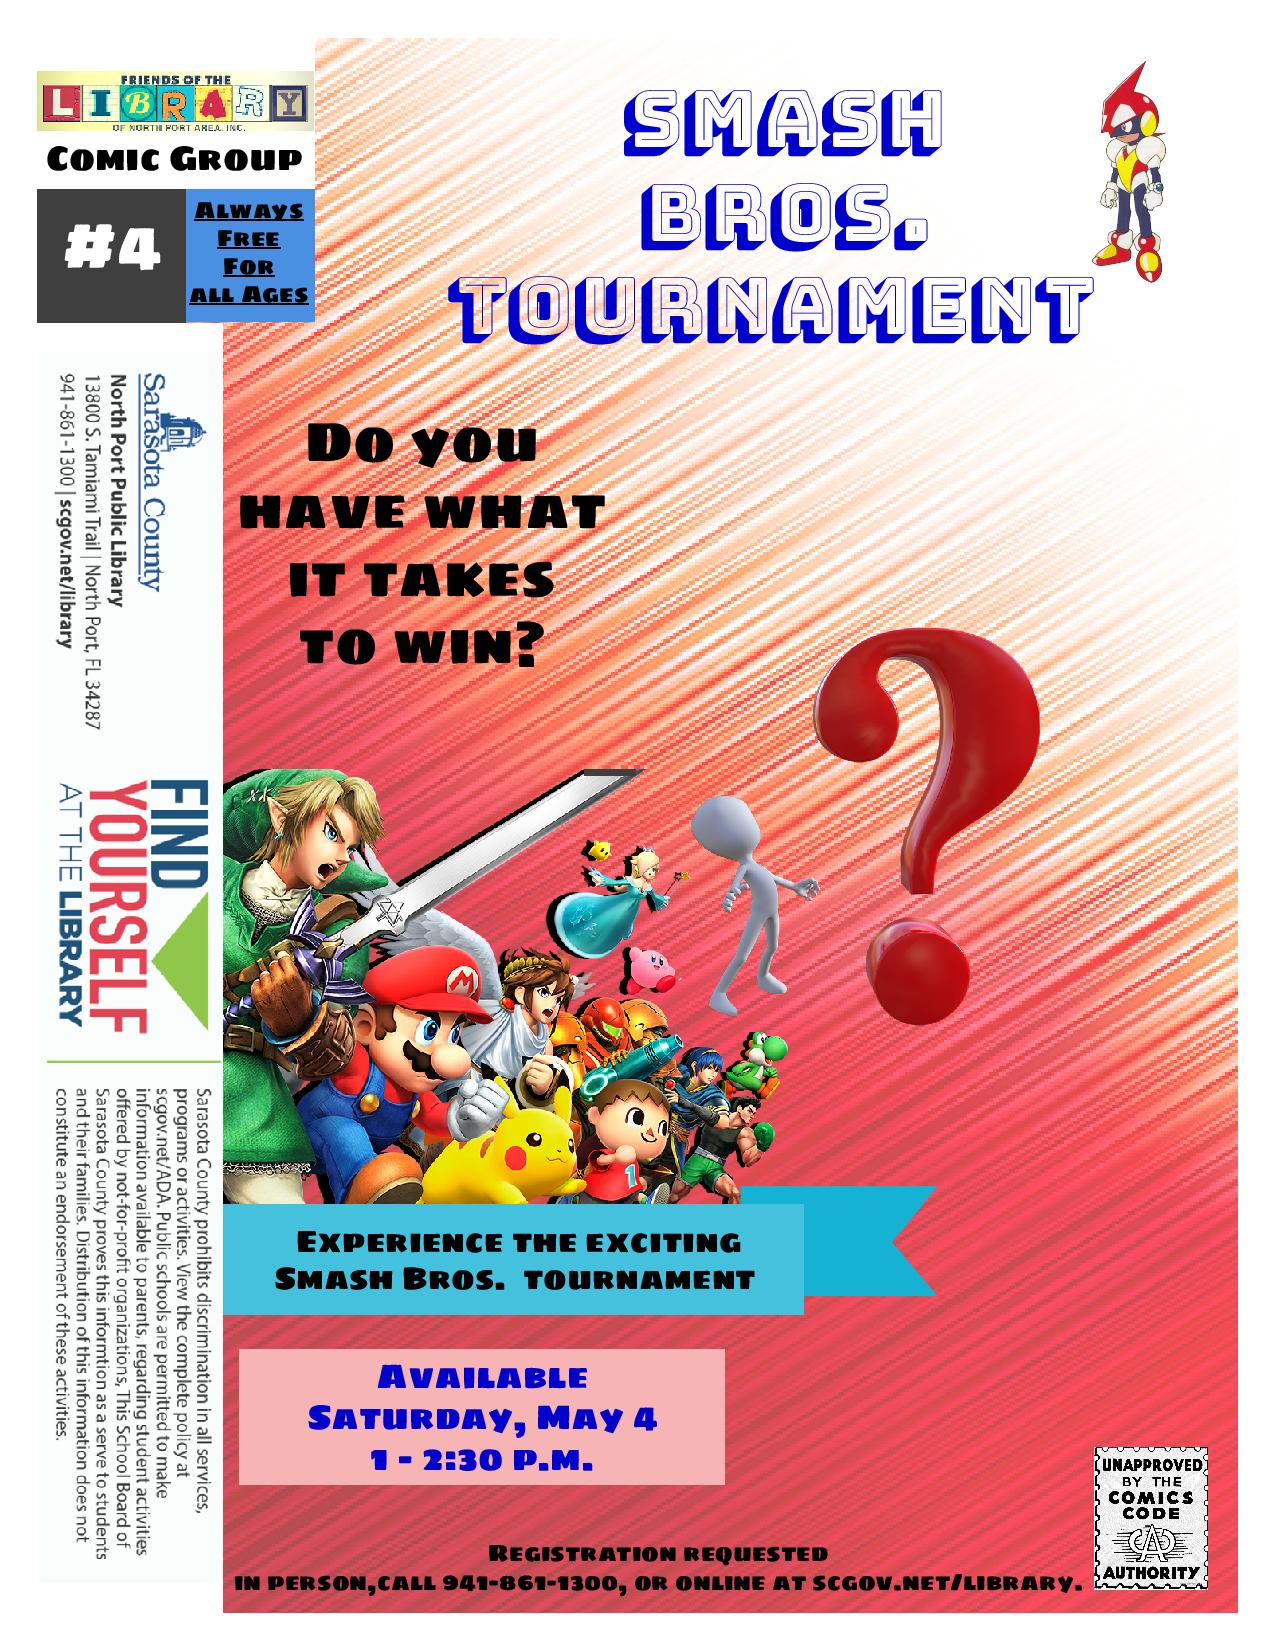 Smash Bros. Brawl tournament for Wii.  Saturday, May 4, 1 - 2:30 p.m.